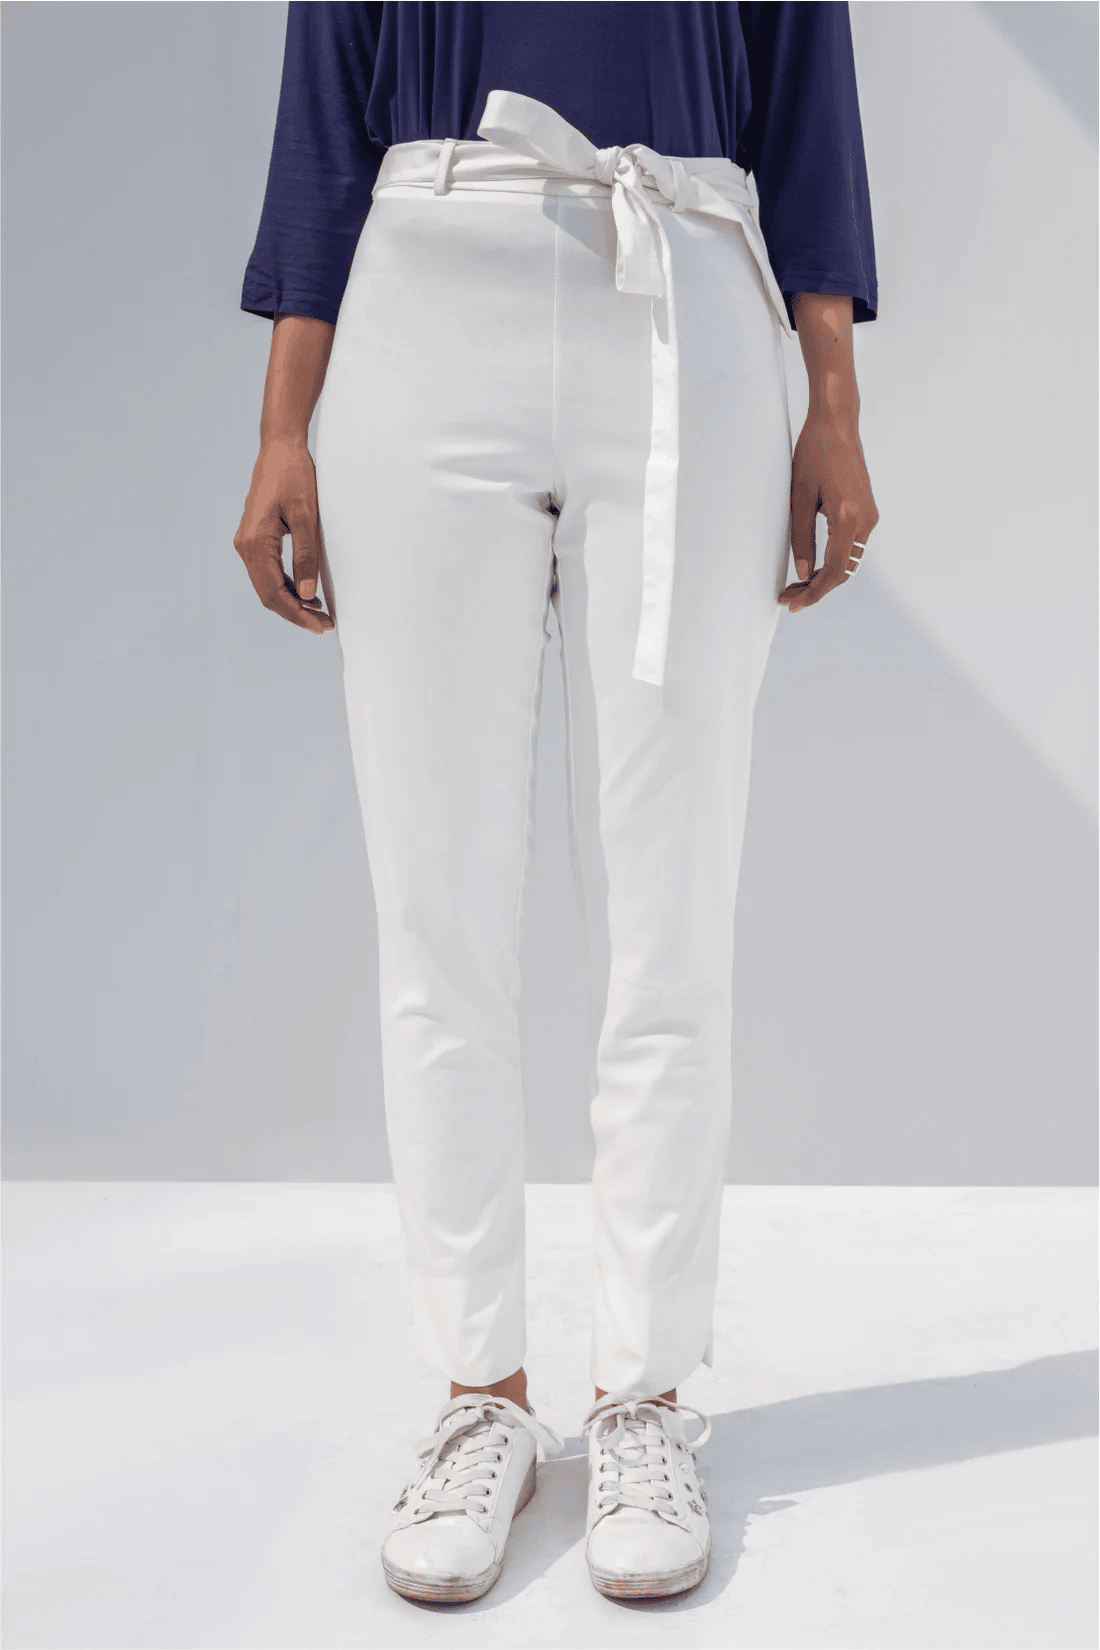 White Color women's Jeans